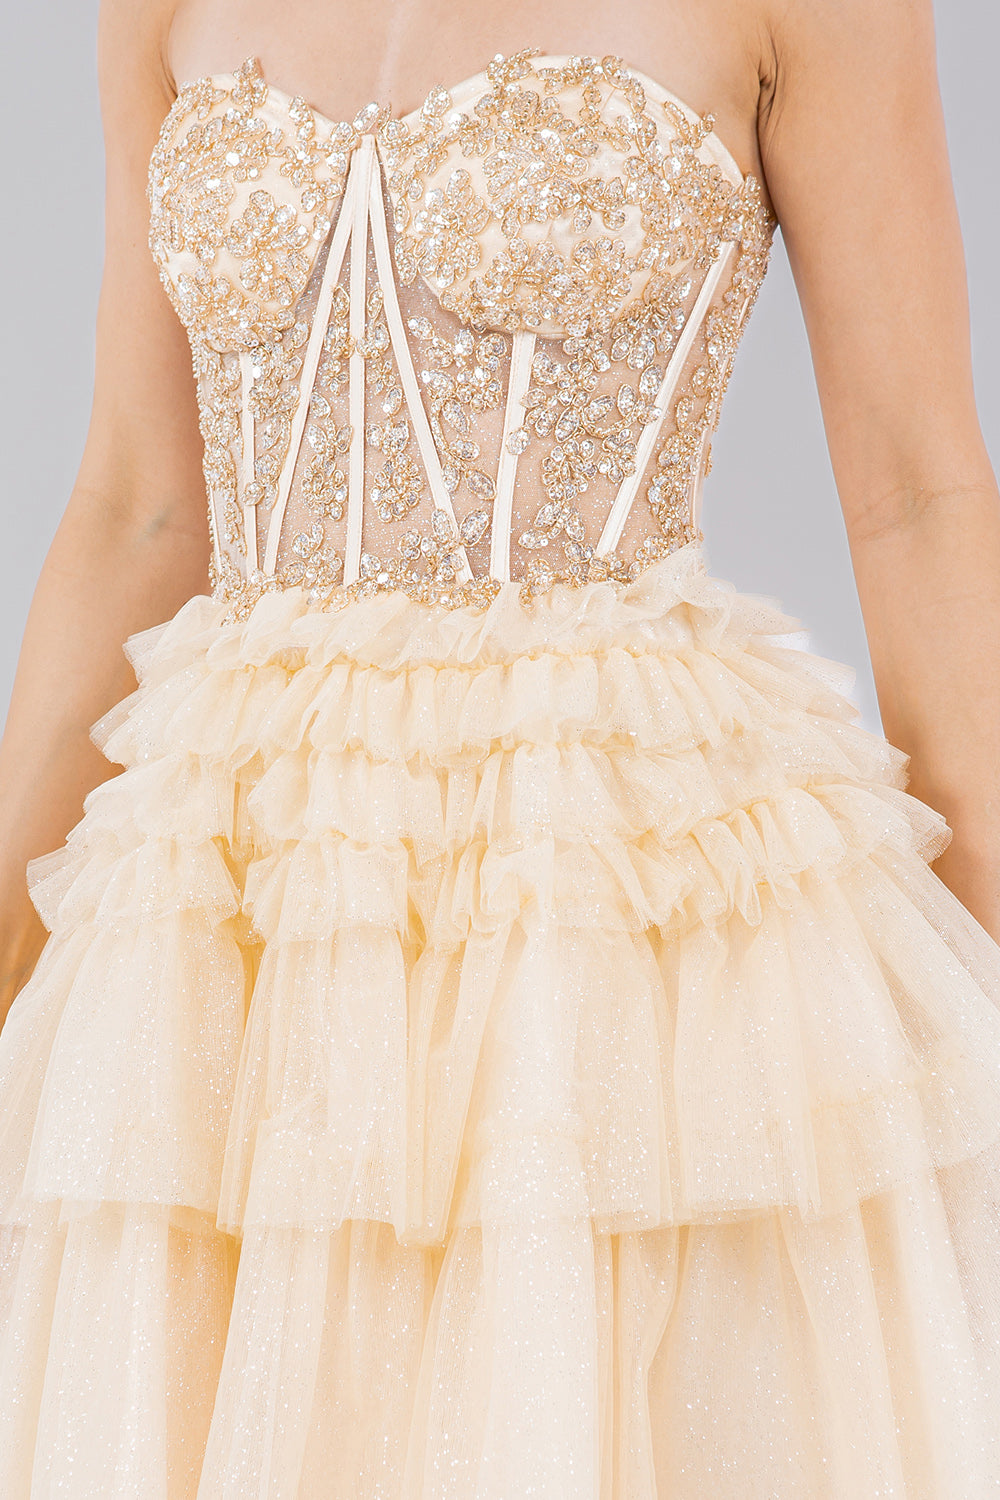 Applique Short Corset Tiered Dress by Cinderella Couture 5133J